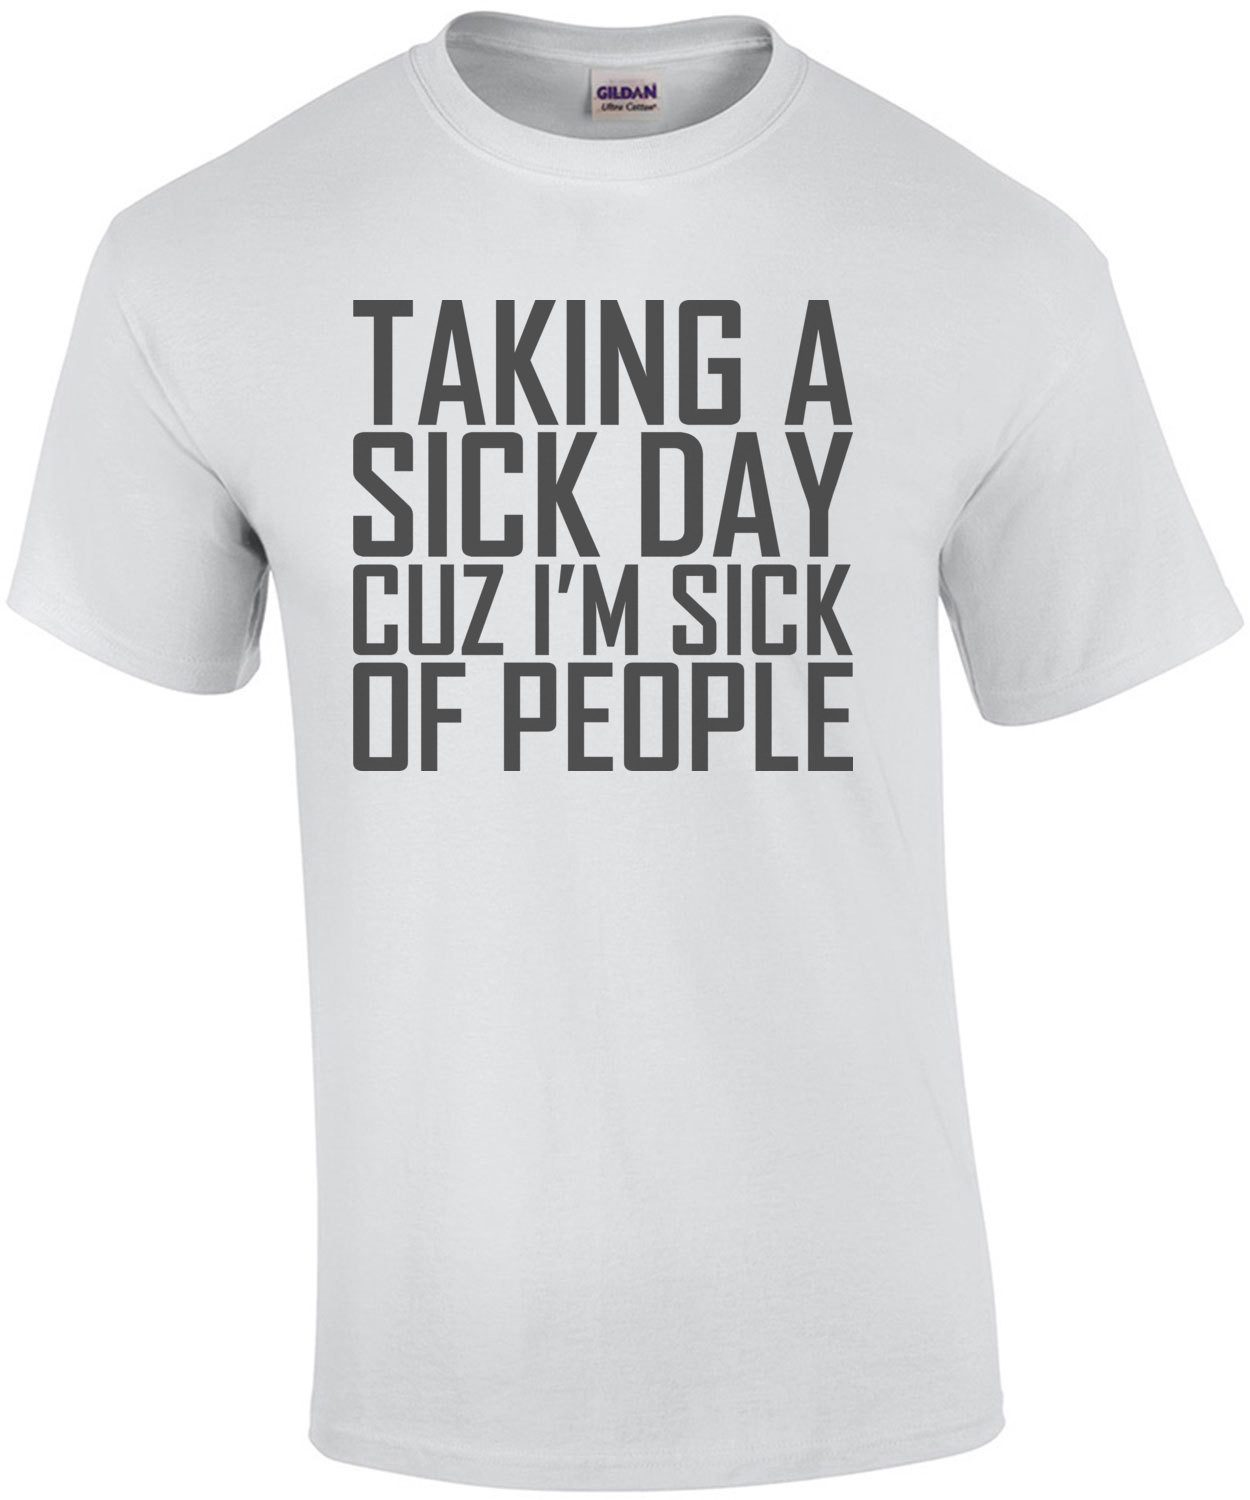 Taking A Sick Day Cuz I'm Sick Of People T-Shirt